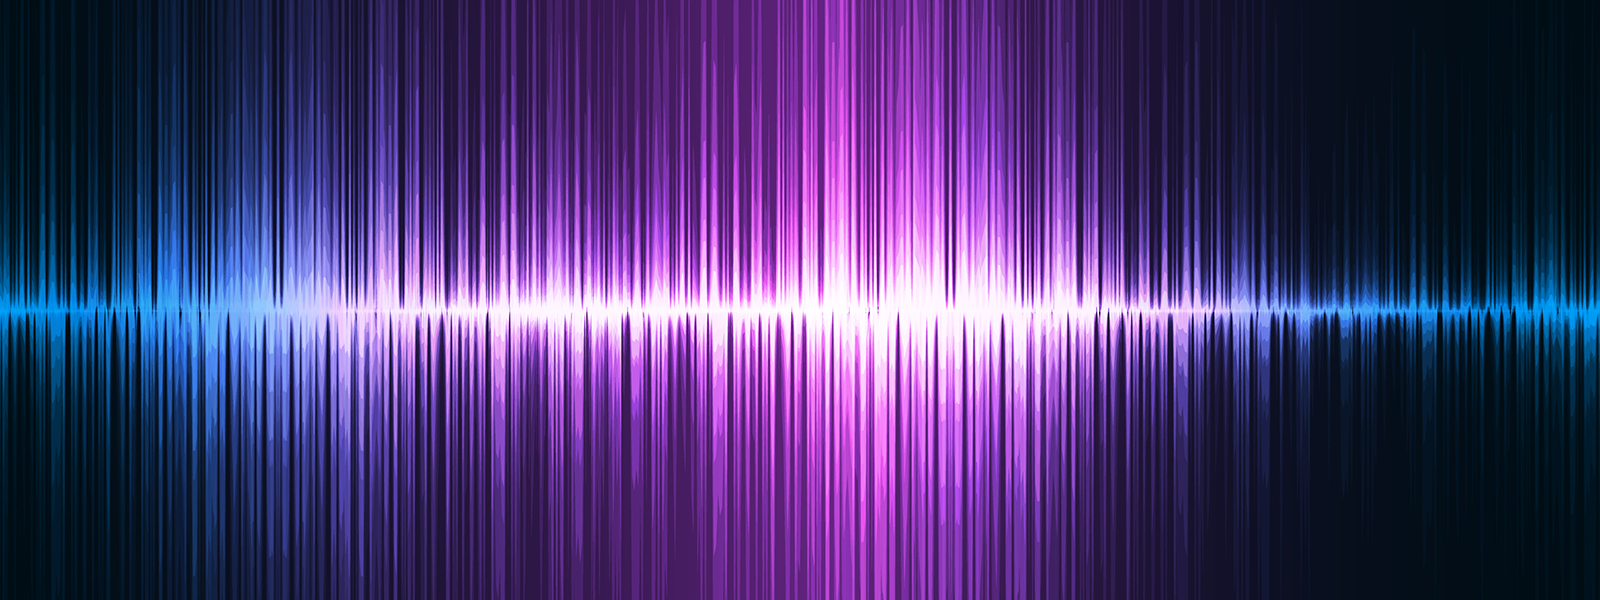 Image of ultra sonic soundwave